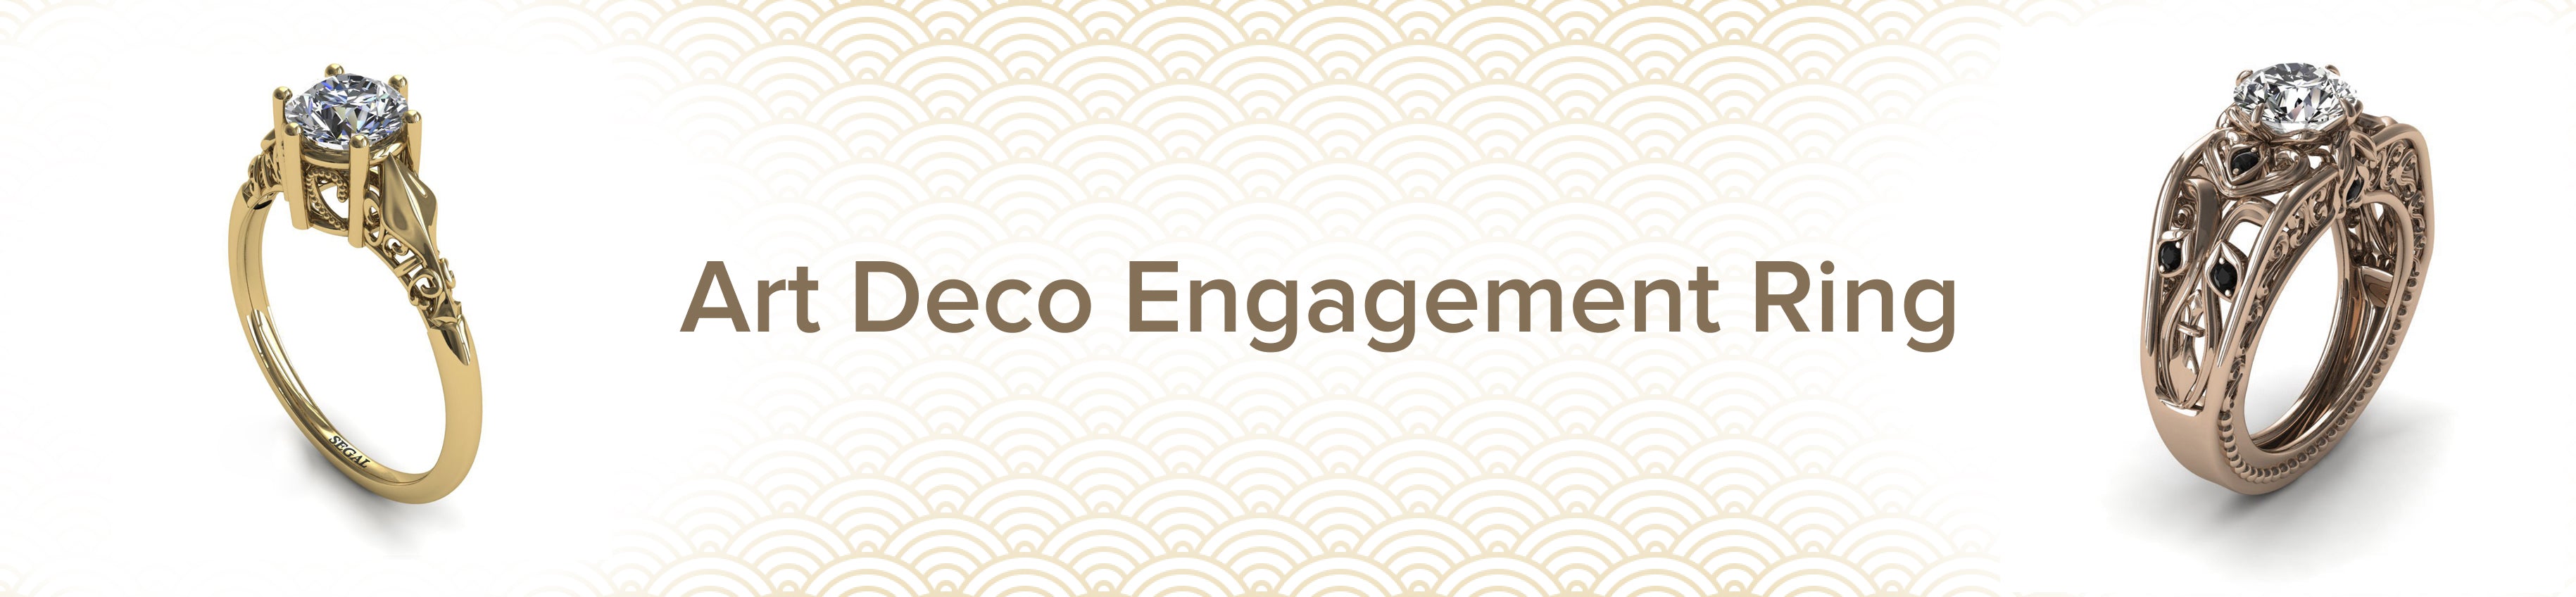 Art Deco Engagement Rings Banner